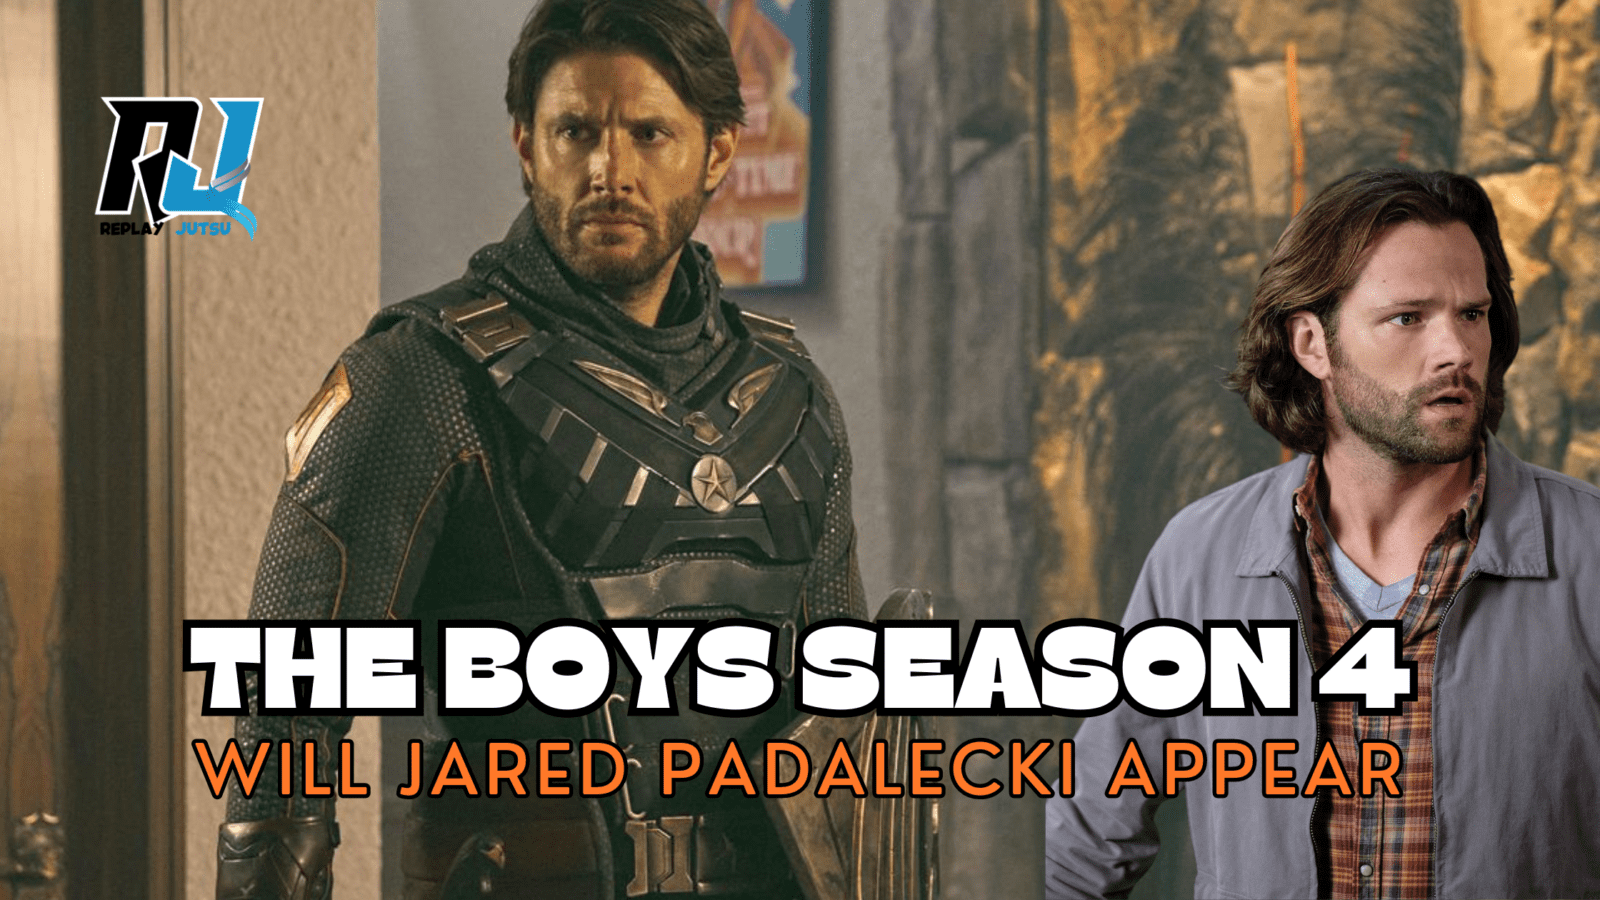 Will Jared Padalecki Appear in The Boys Season 4?